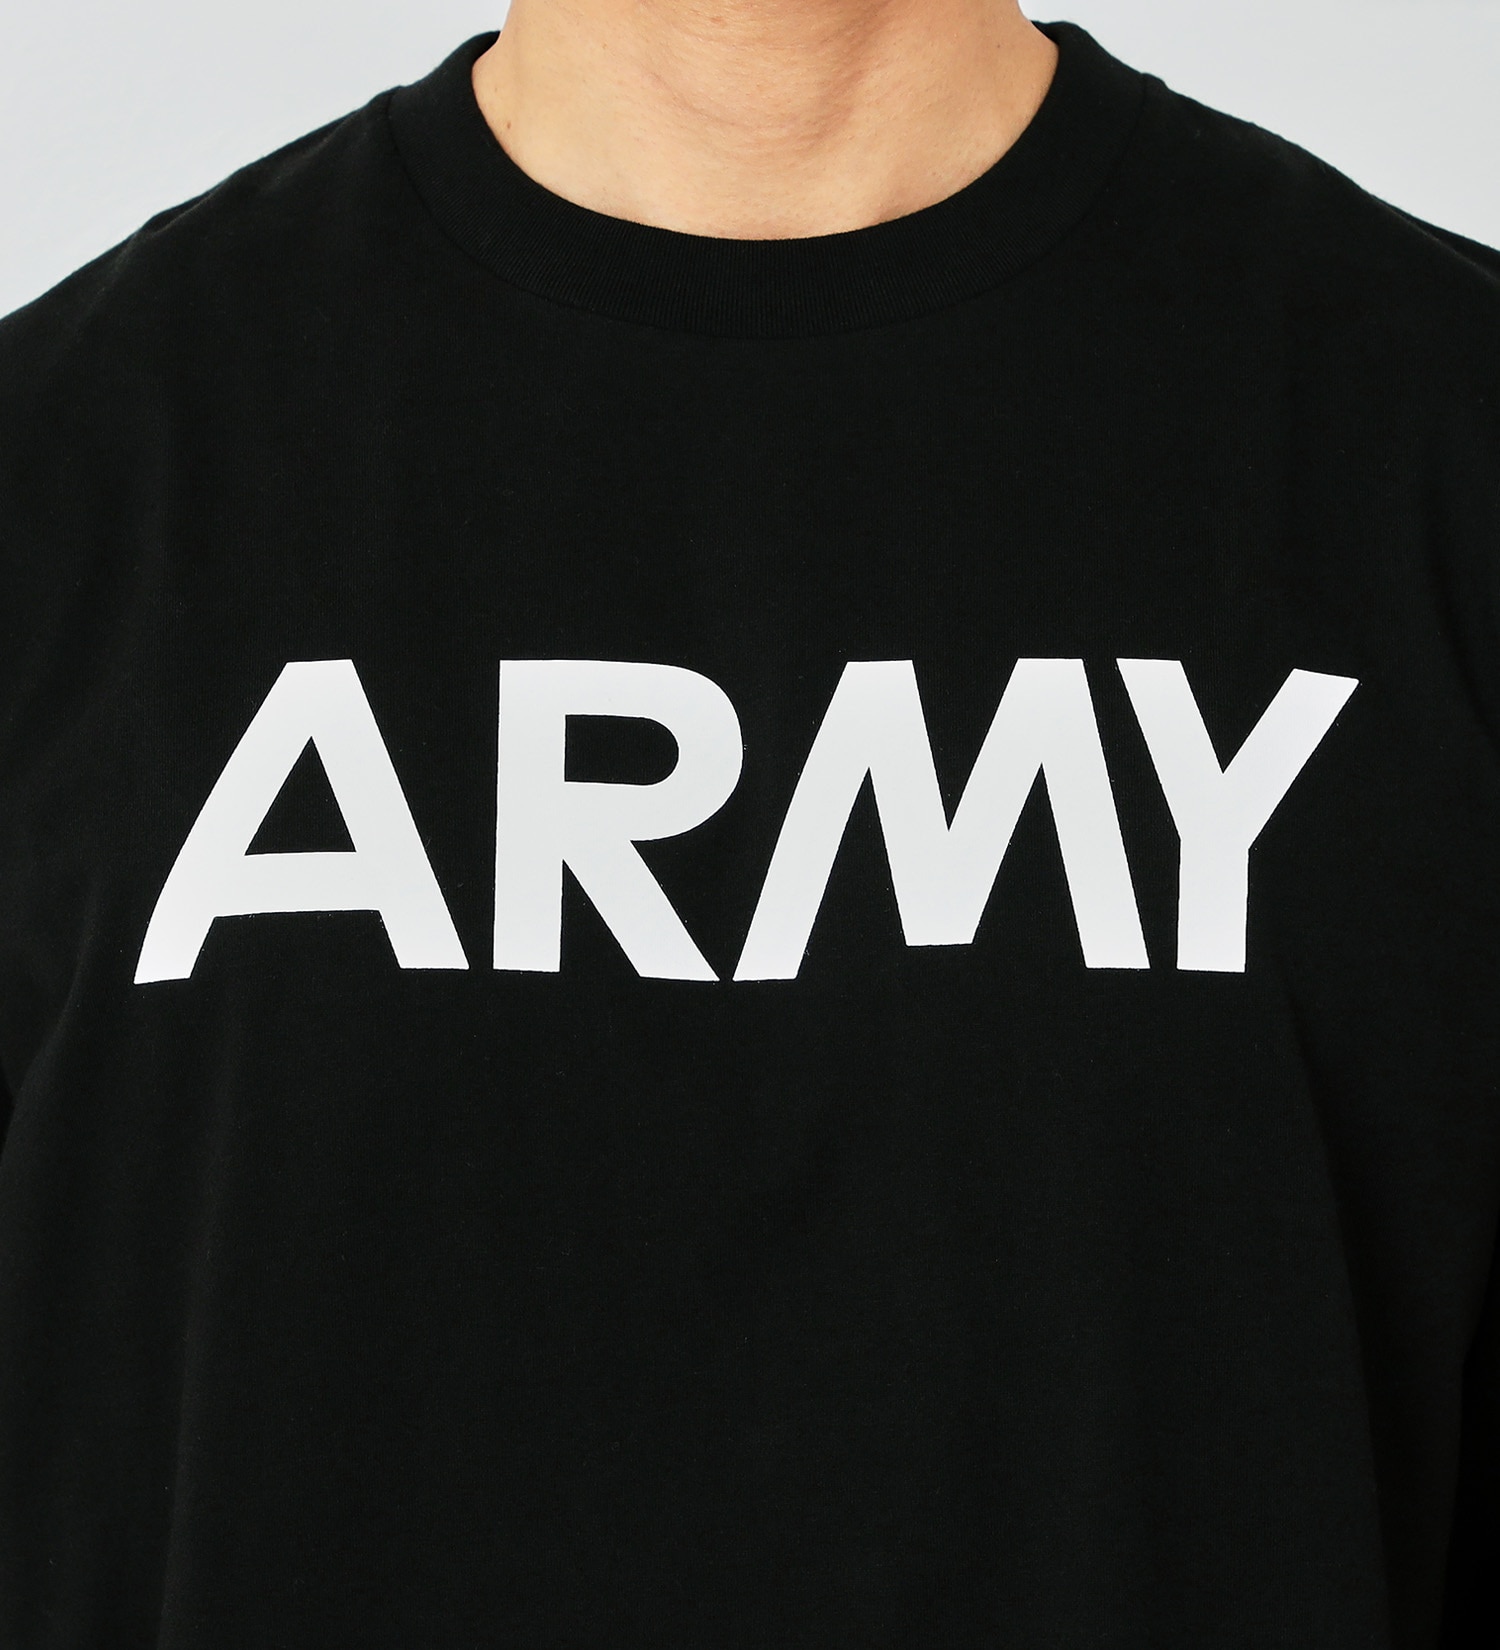 ALPHA(アルファ)の【GW SALE】【ALPHA x OSHMAN’S(オッシュマンズ)】トレーニング 長袖Tシャツ(ARMY)|トップス/Tシャツ/カットソー/メンズ|ブラック